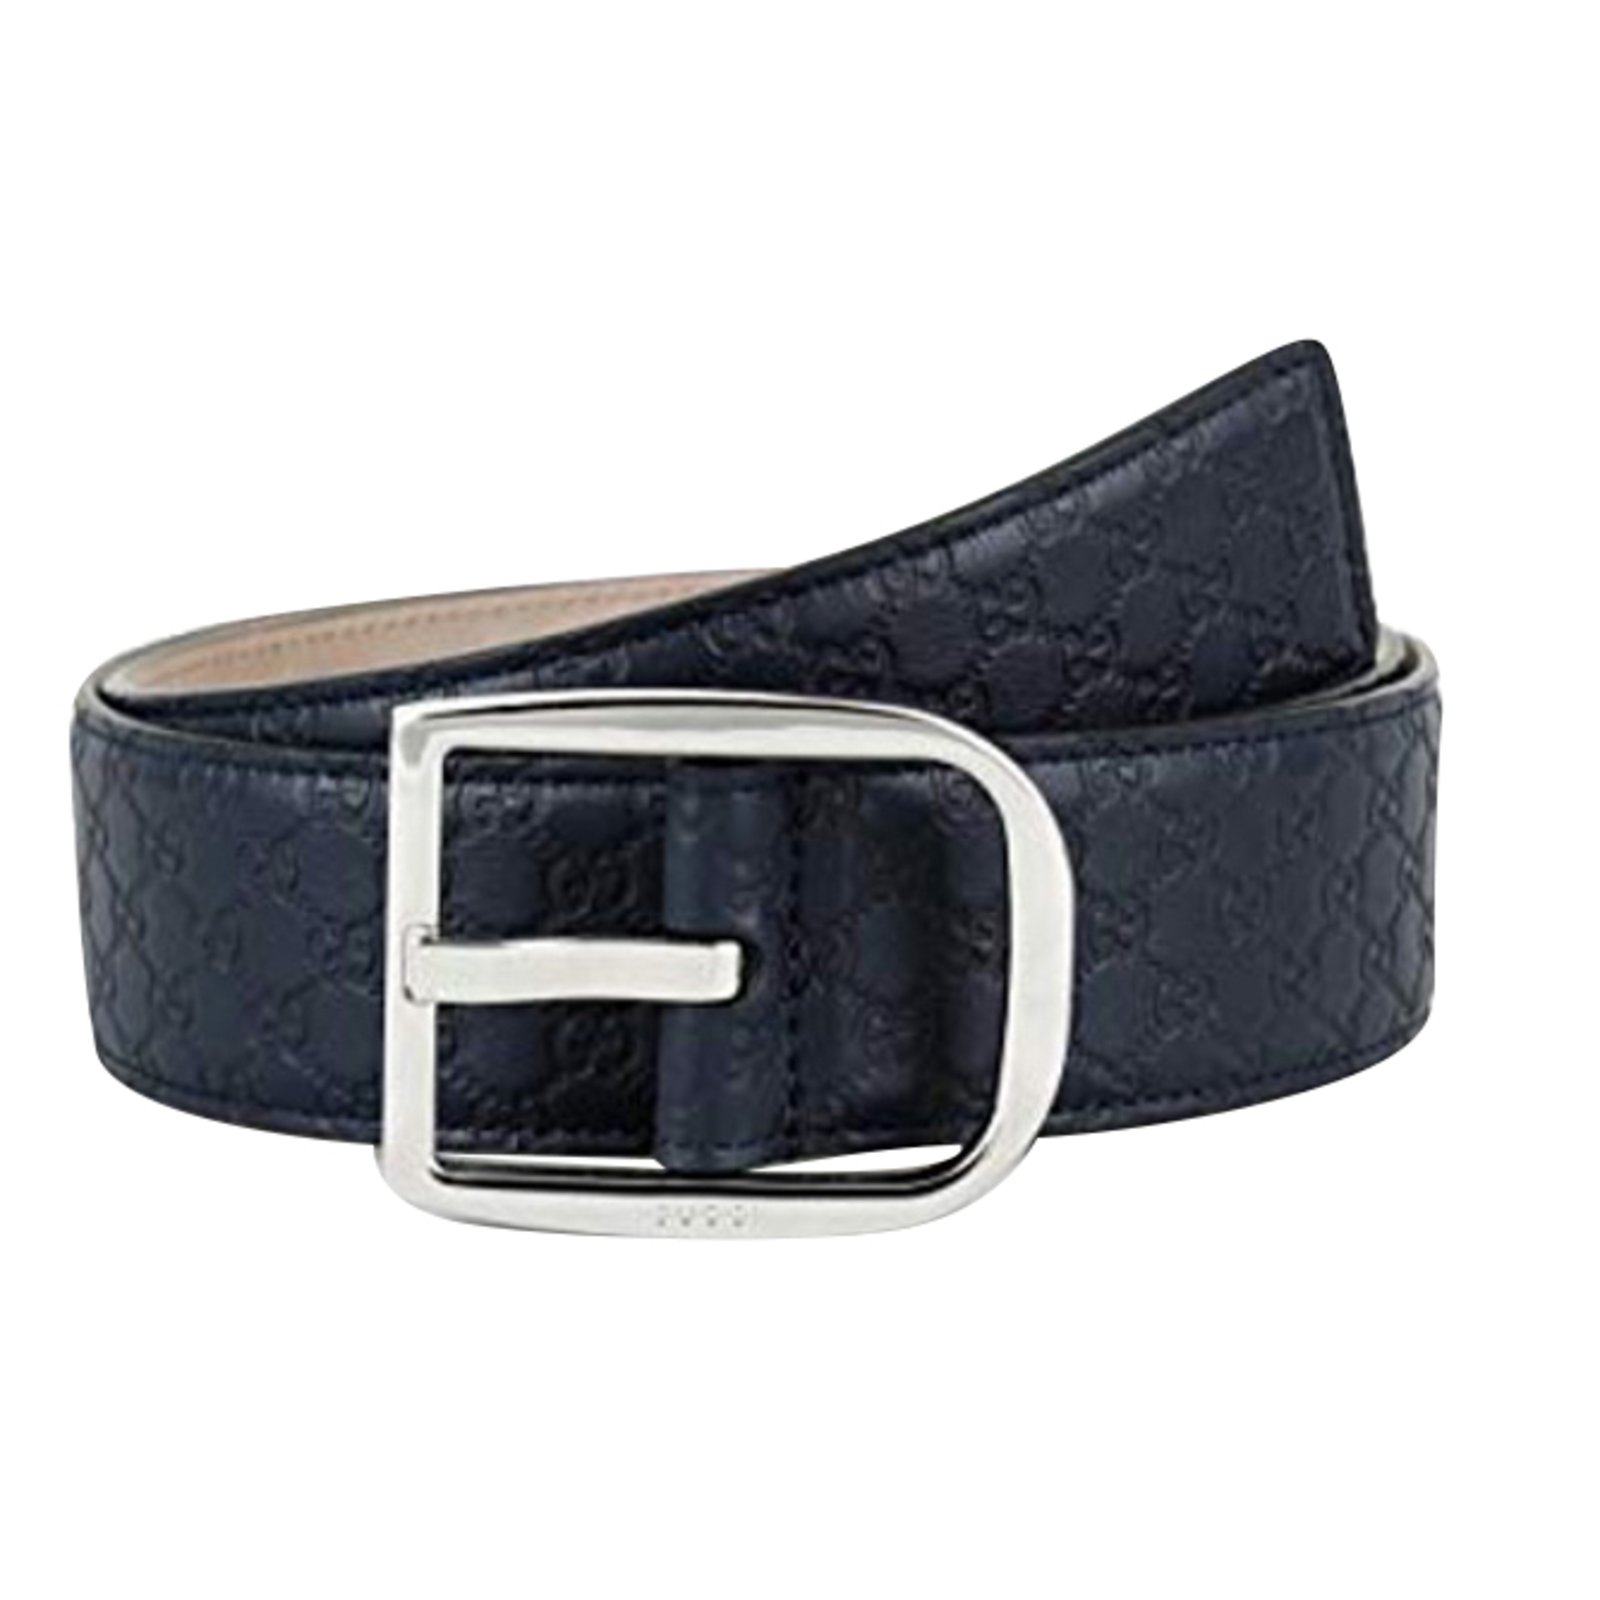 Gucci microguccissima leather belt 